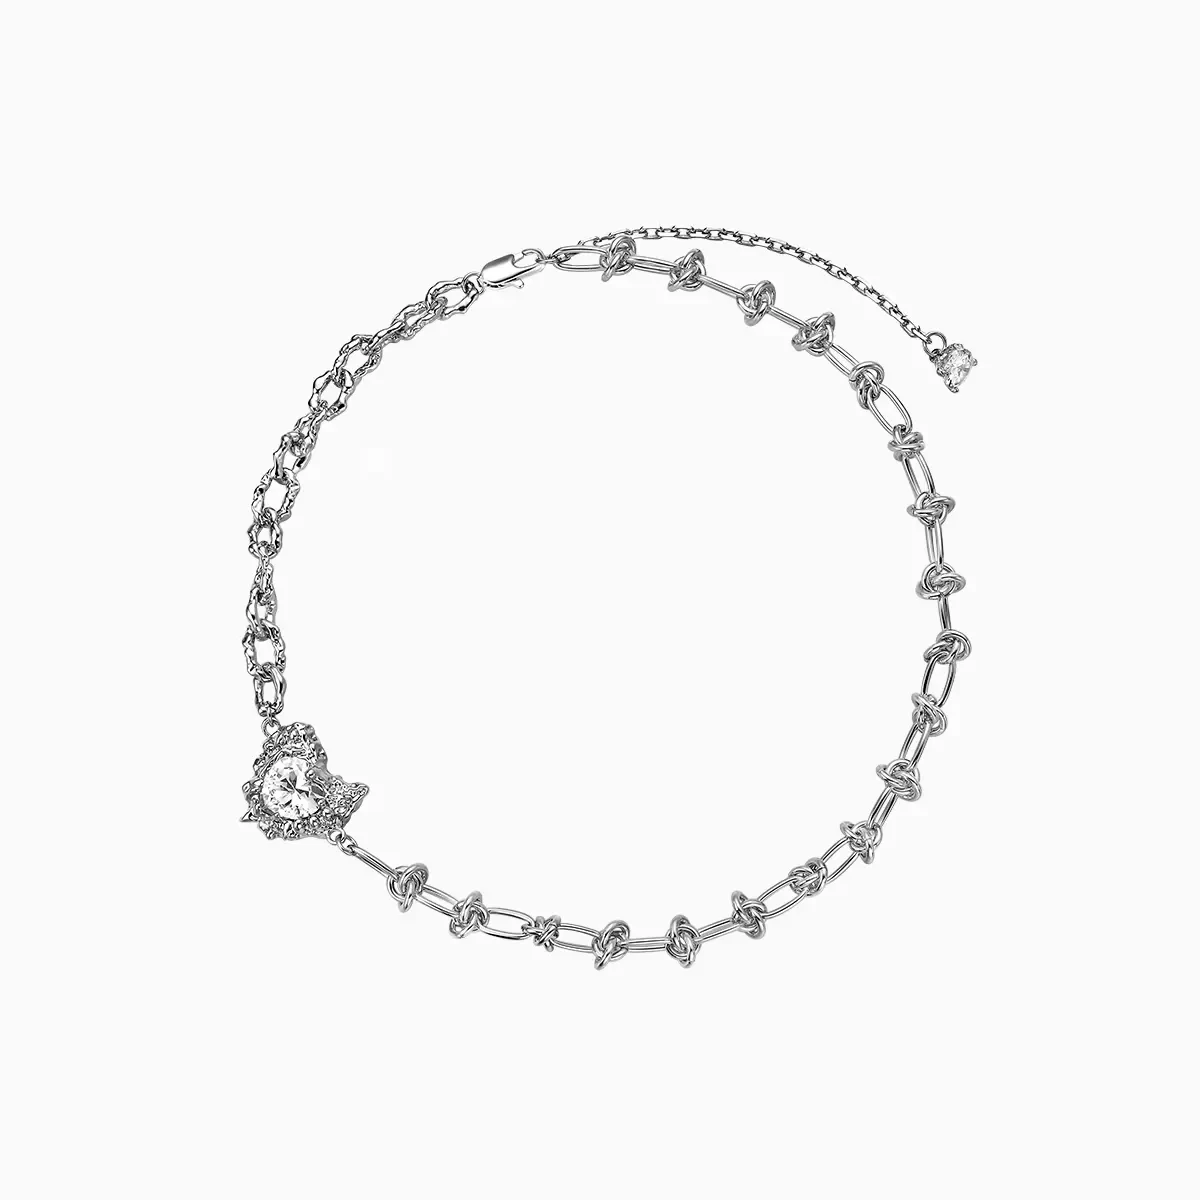 Original Design Love Zircon Lava Texture Rope Knot Chain Stitching Pendant Necklace Fashion Personality Jewelry Accessories